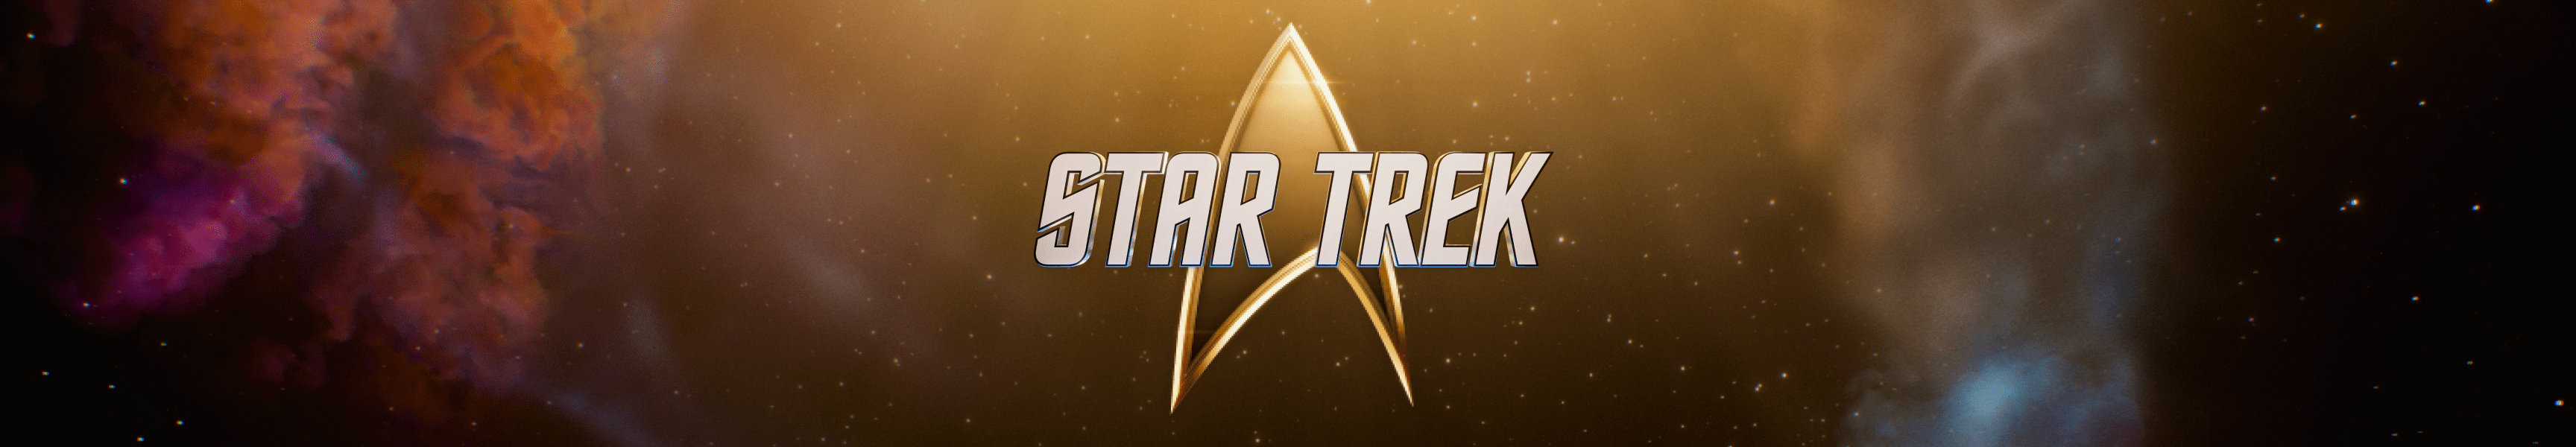 Star Trek: First Contact 25th Anniversary Black Mug